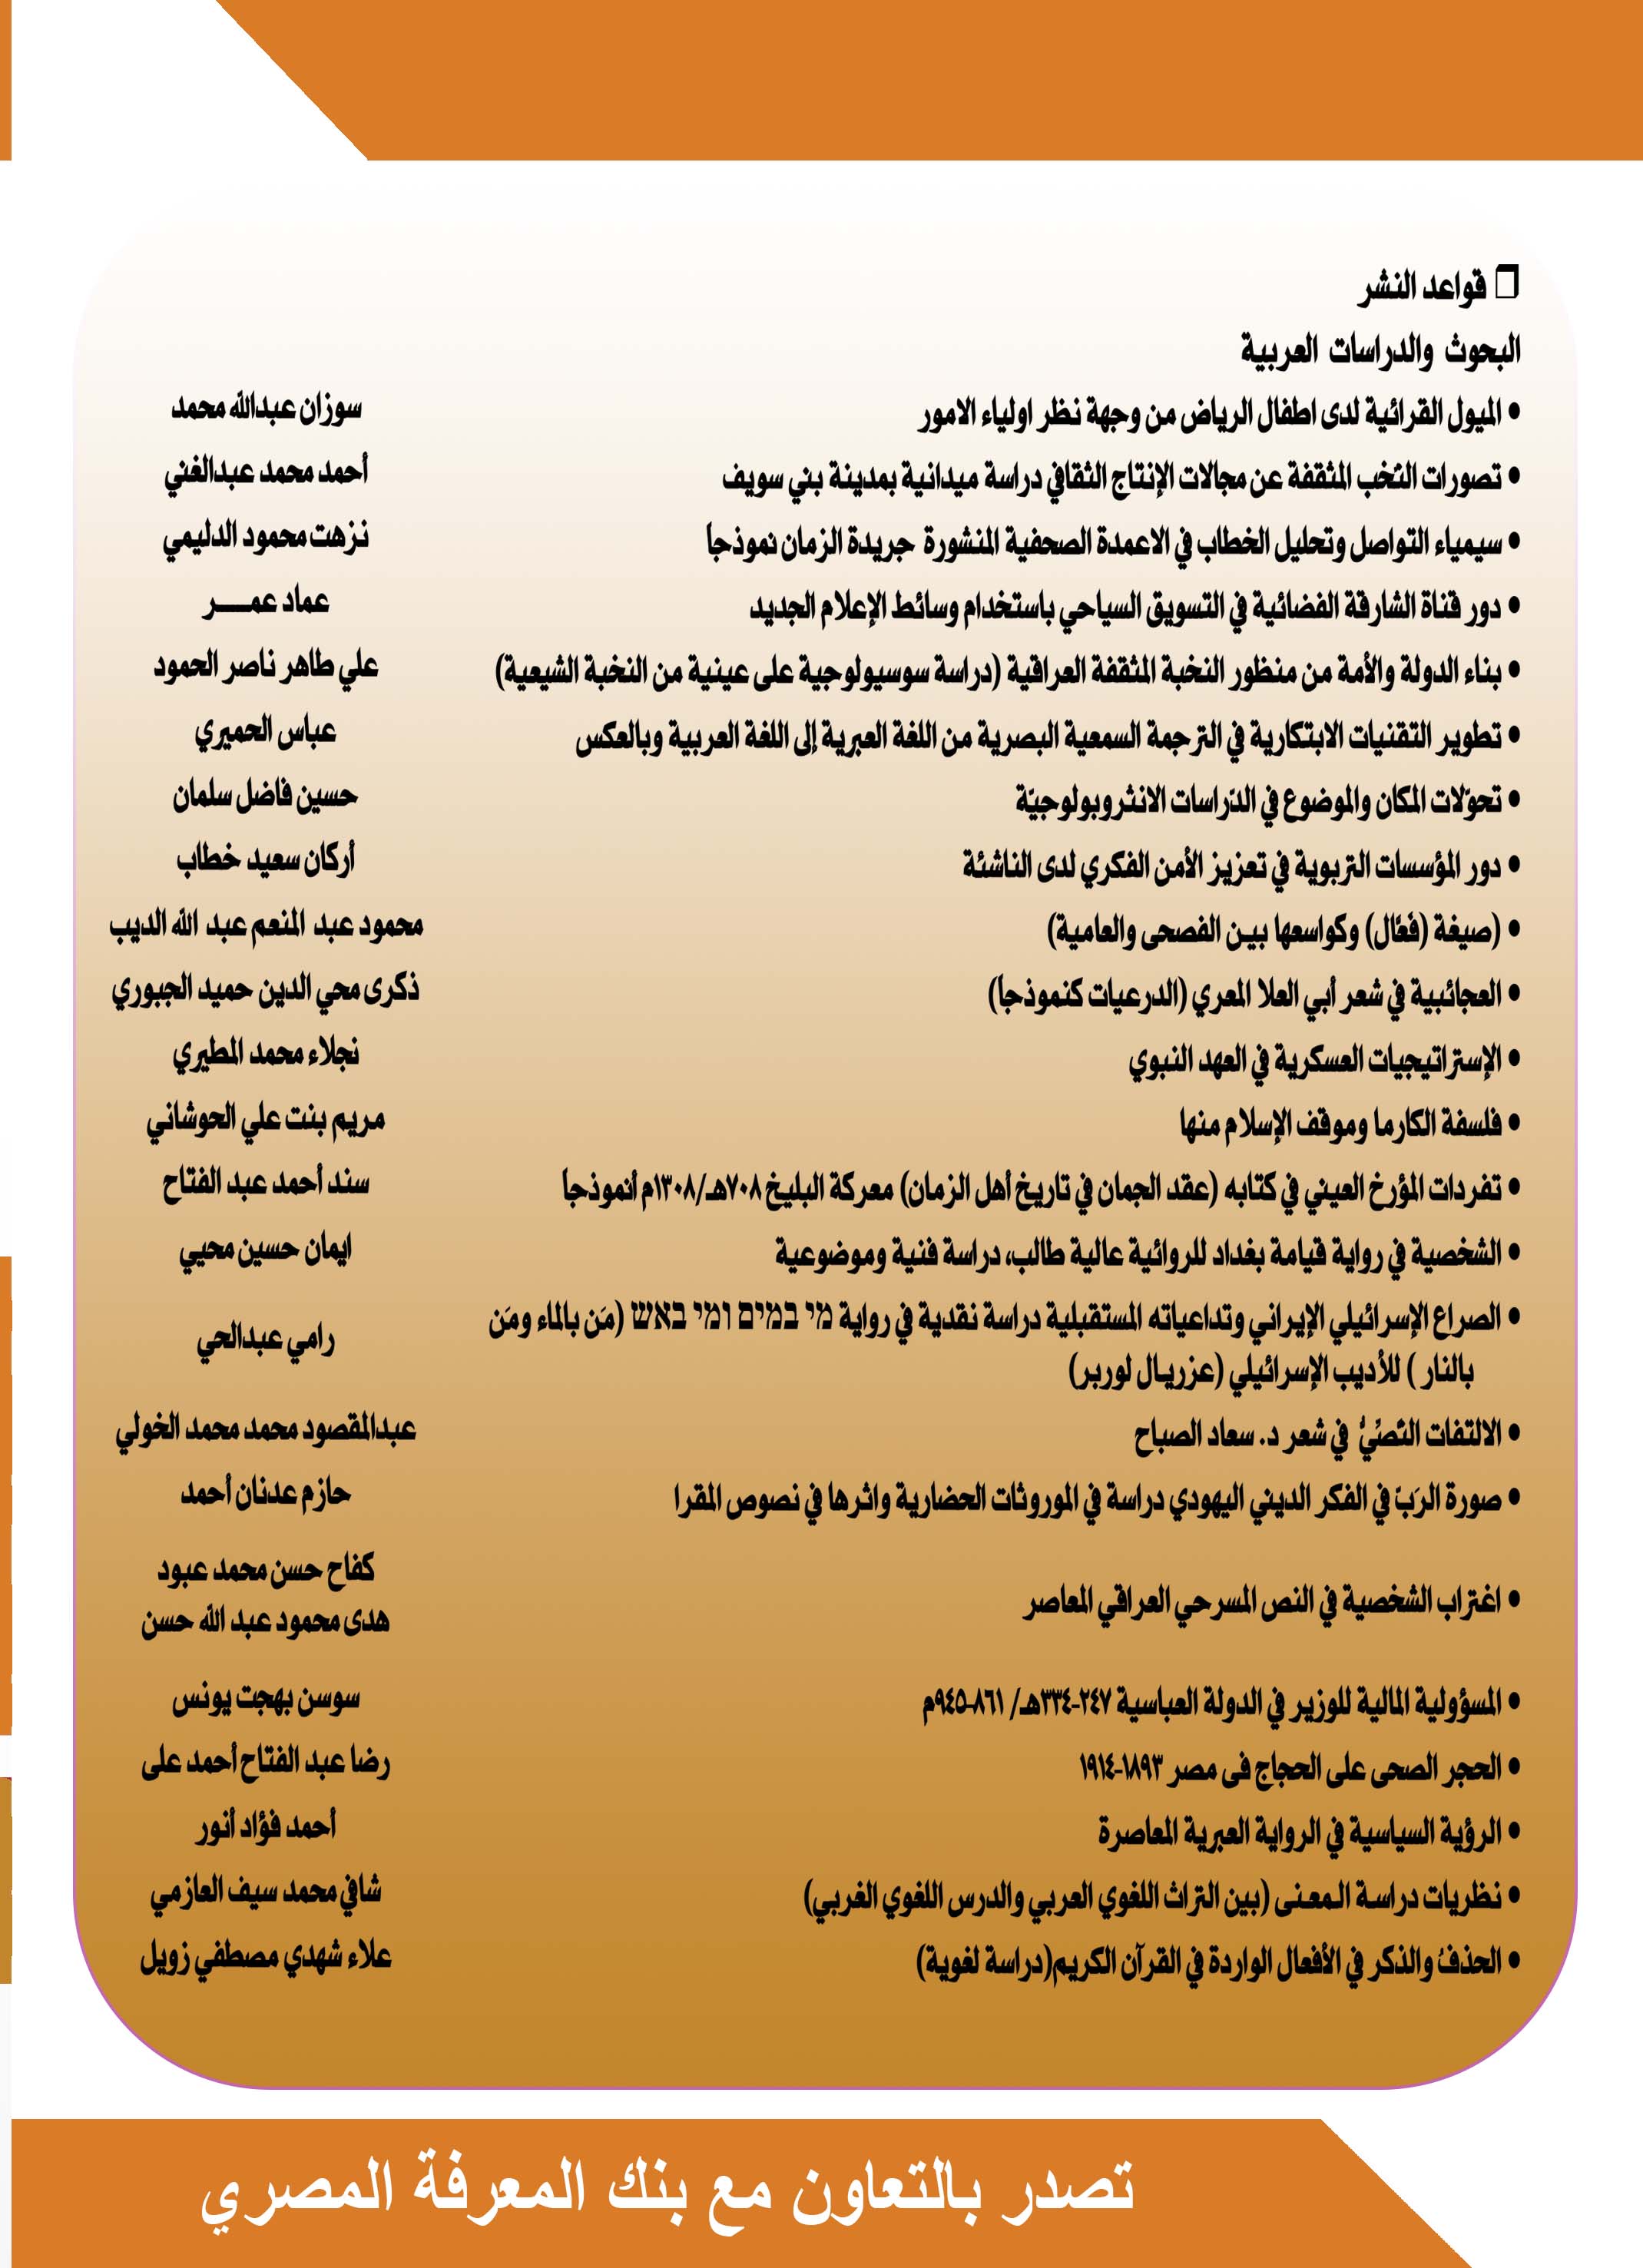 Annals of the Faculty of Arts, Ain Shams University